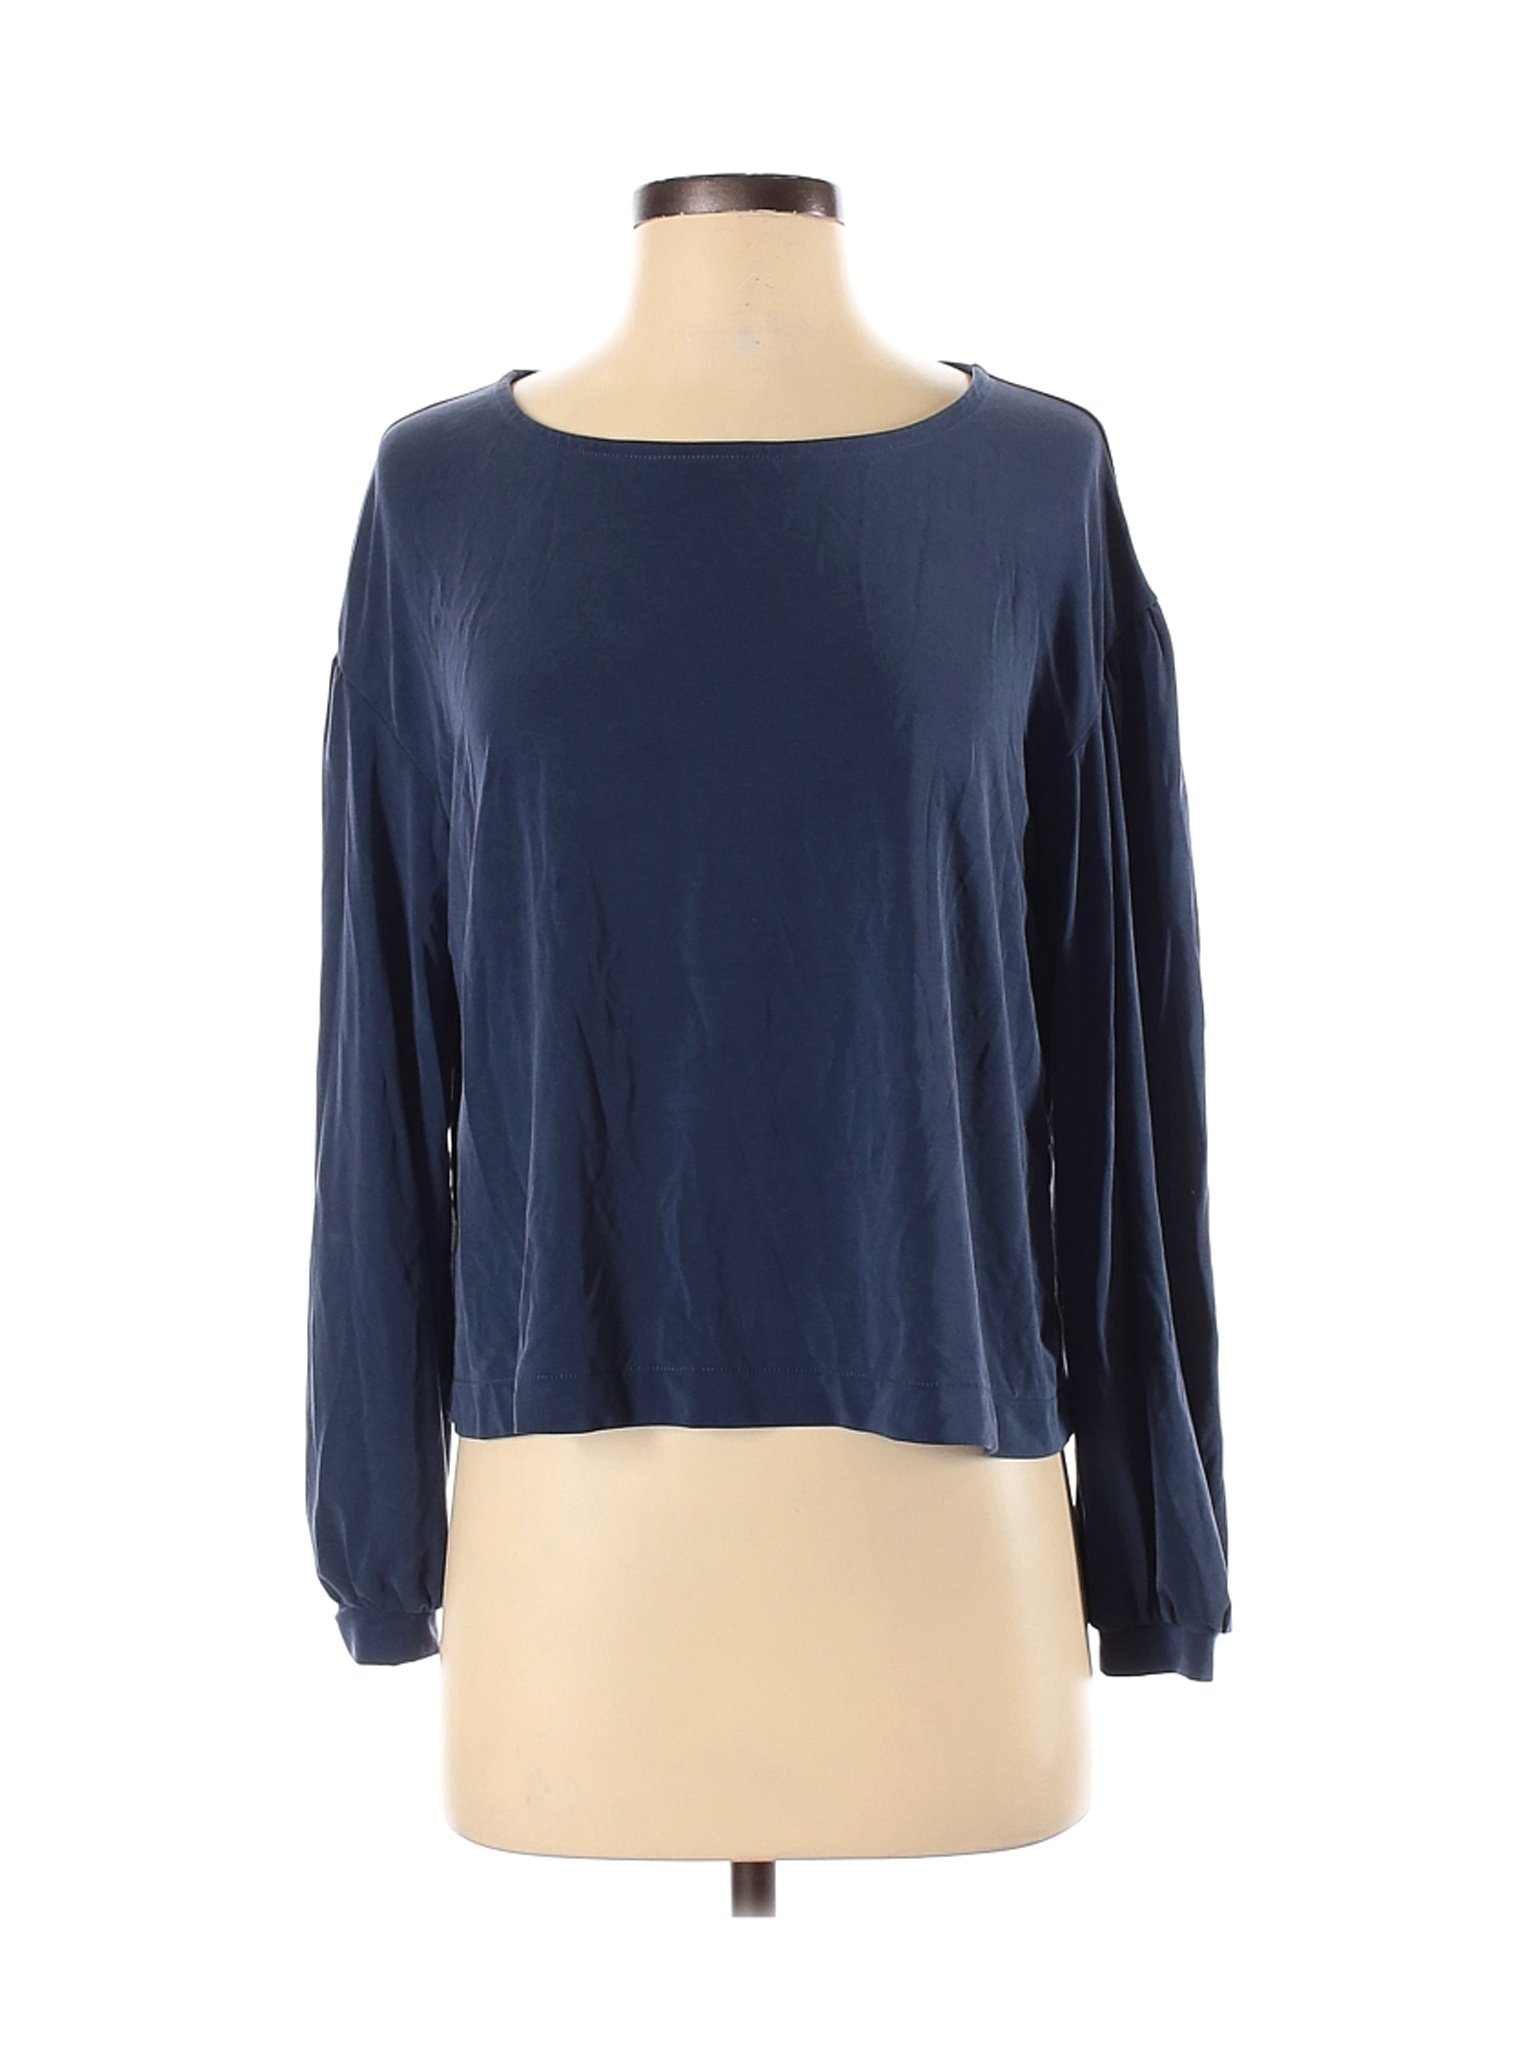 Madewell Women Blue Long Sleeve Top S | eBay